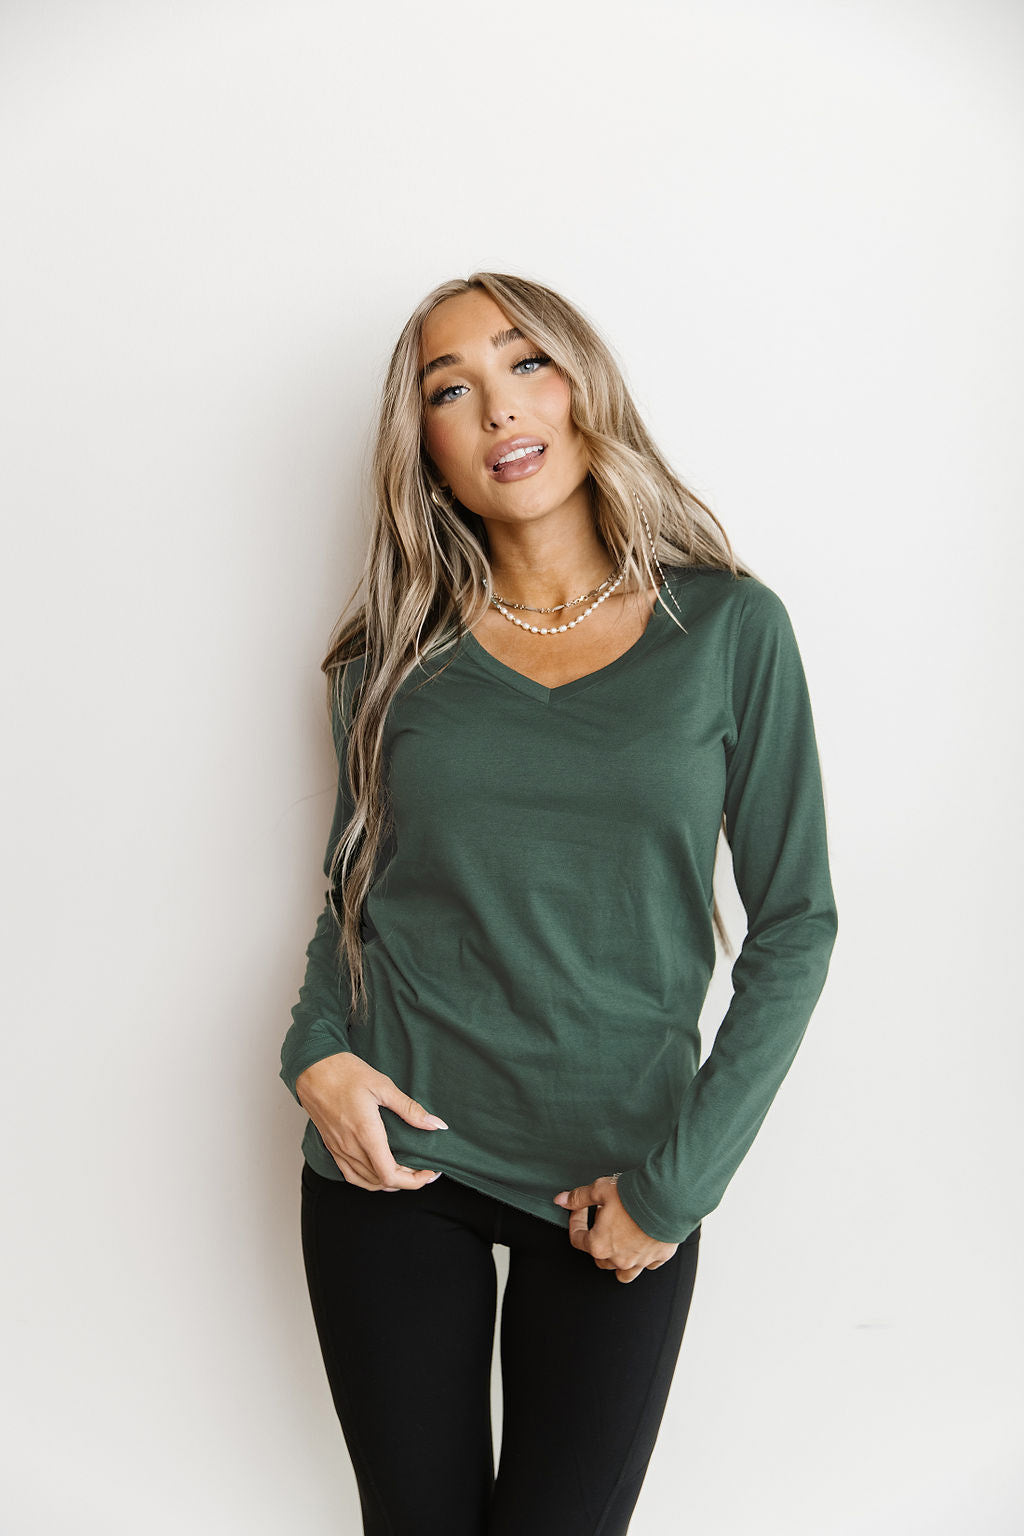 Long Sleeve VNeck Lulu Tee - Green - Mindy Mae's Marketcomfy cute hoodies